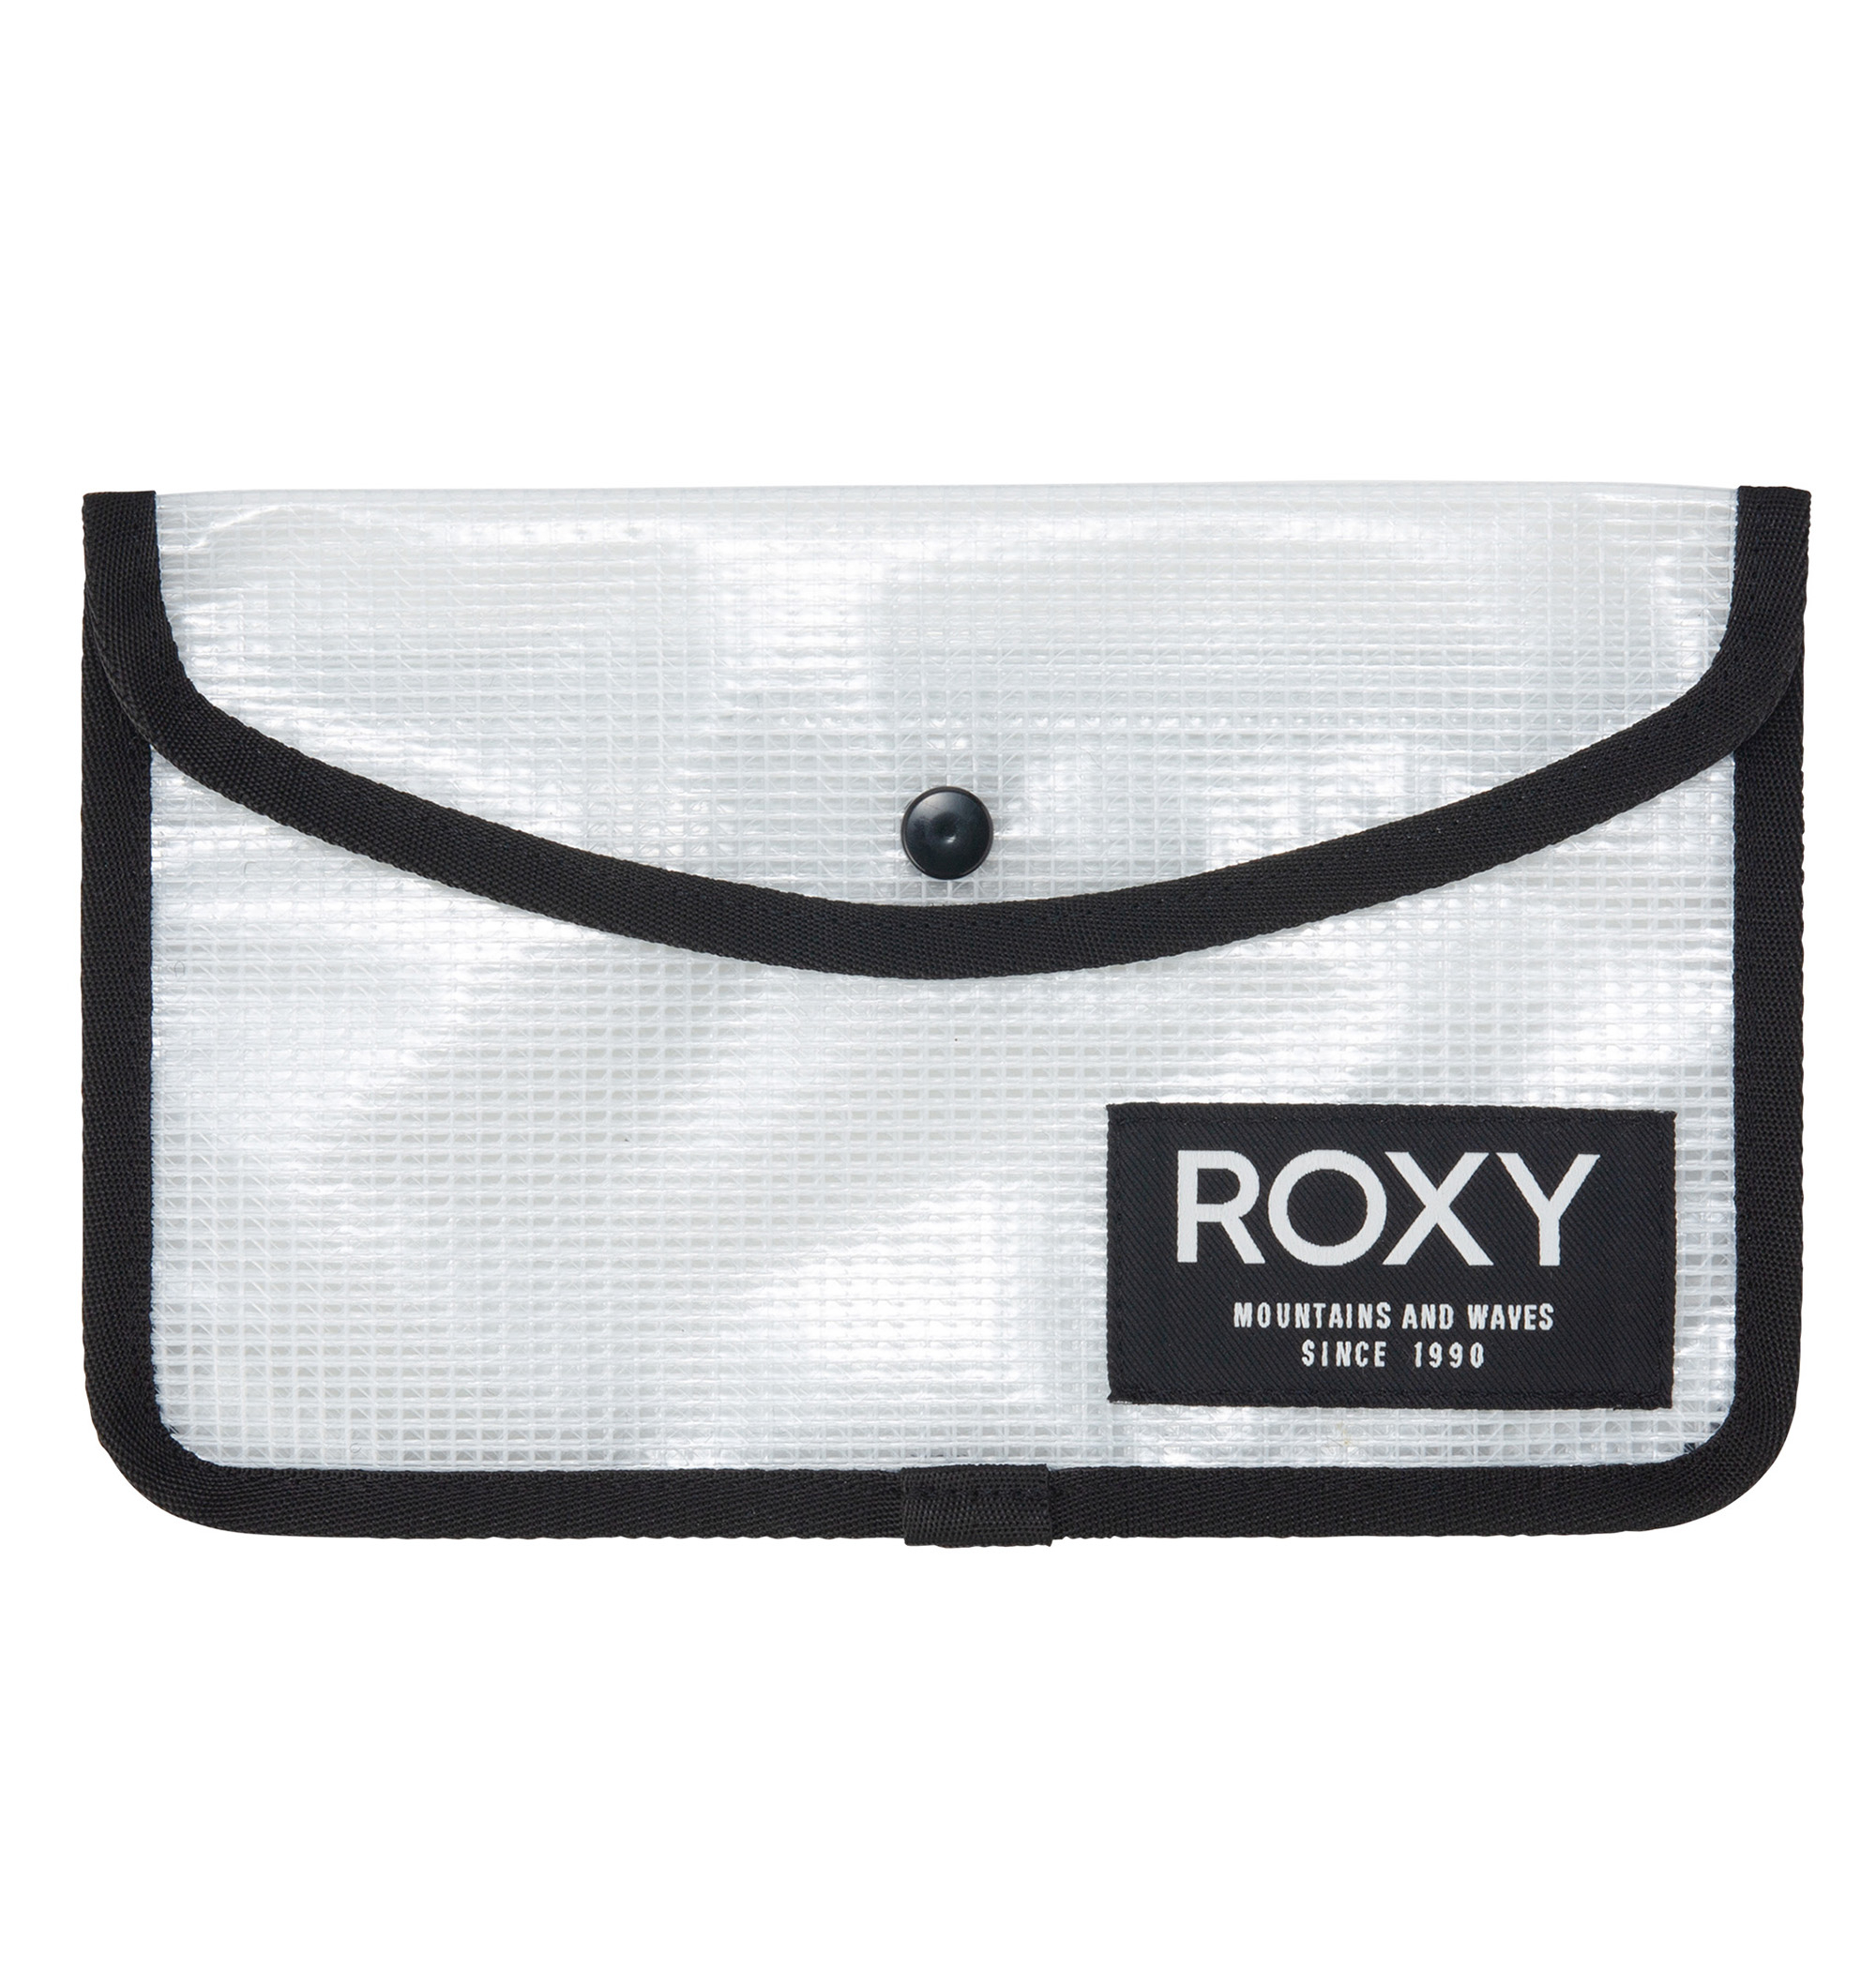 ＜Roxy＞ON THE DOT メッシュとビニールを合わせたミックスPVC素材で、クリアな清涼感を与えてくれるポーチ